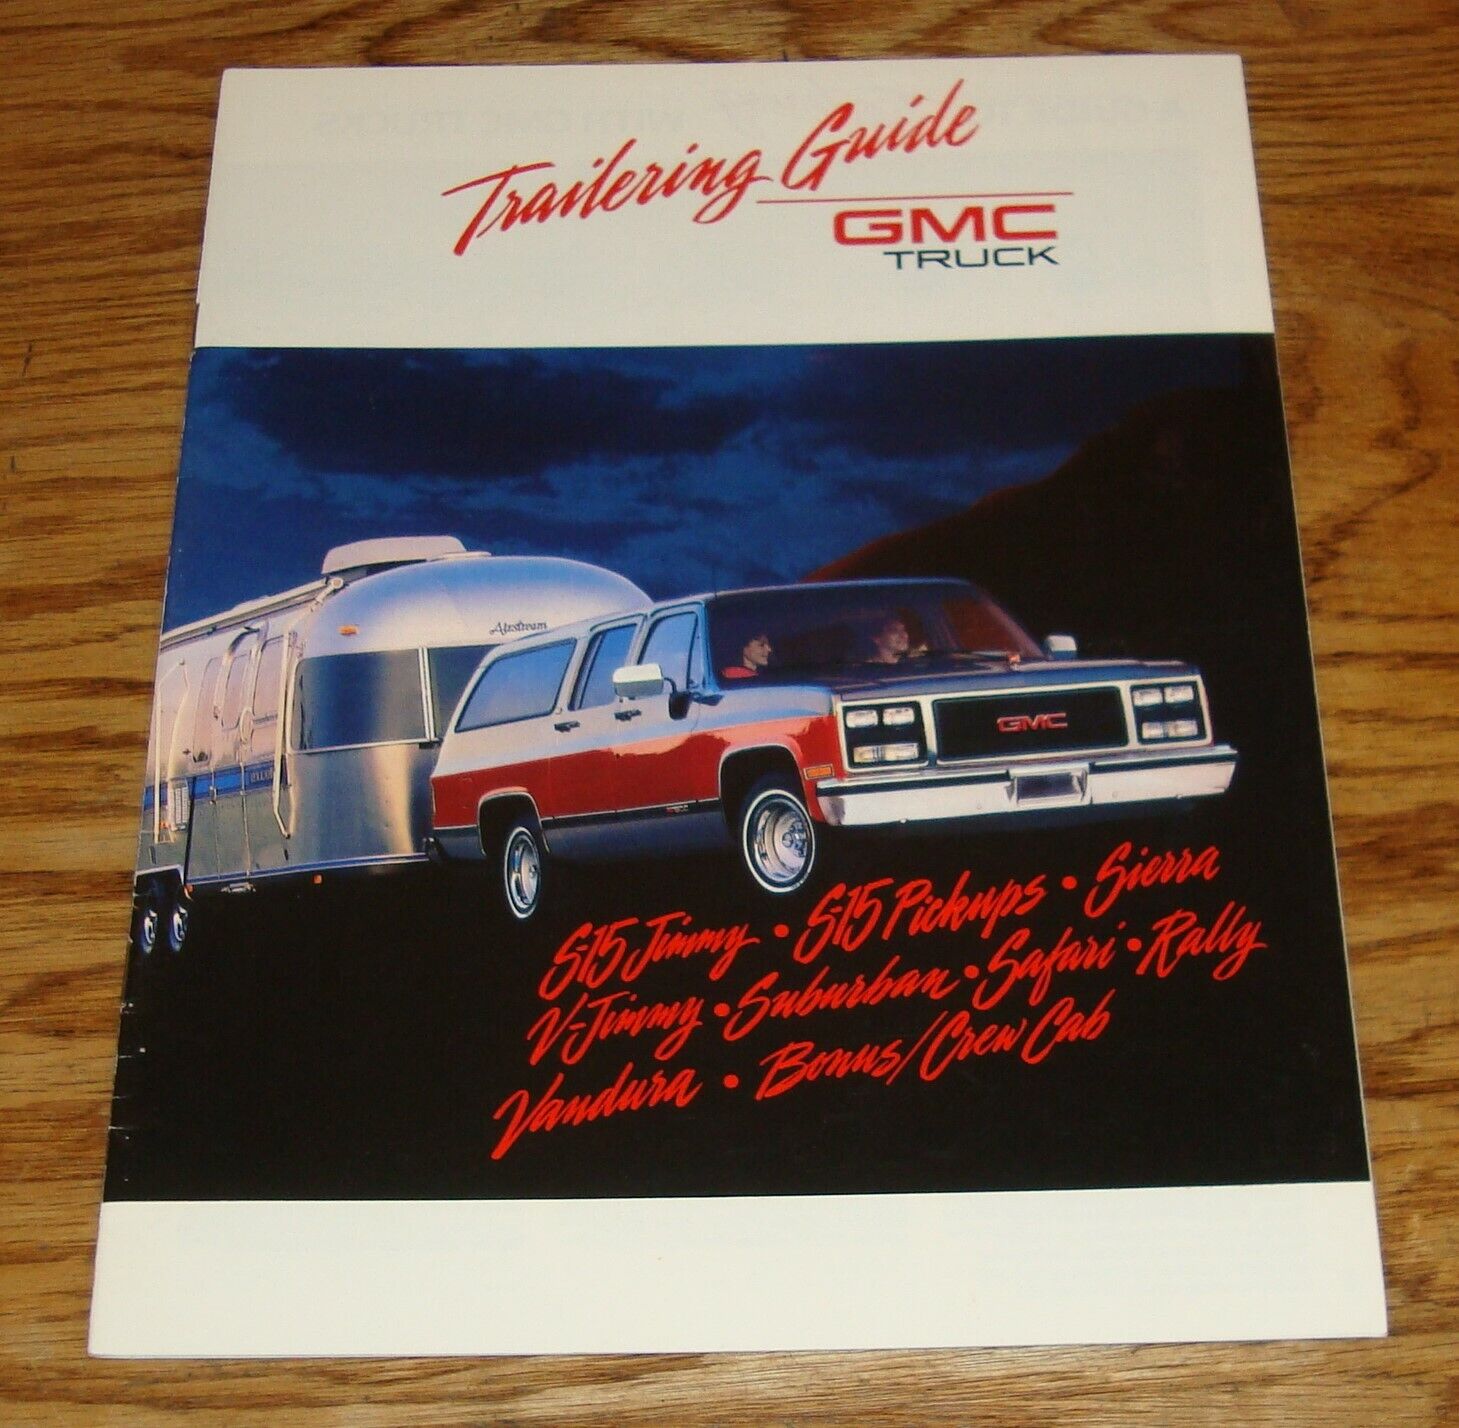 Original 1989 GMC Truck Trailering Guide Sales Brochure 89 Pickup Suburban Jimmy